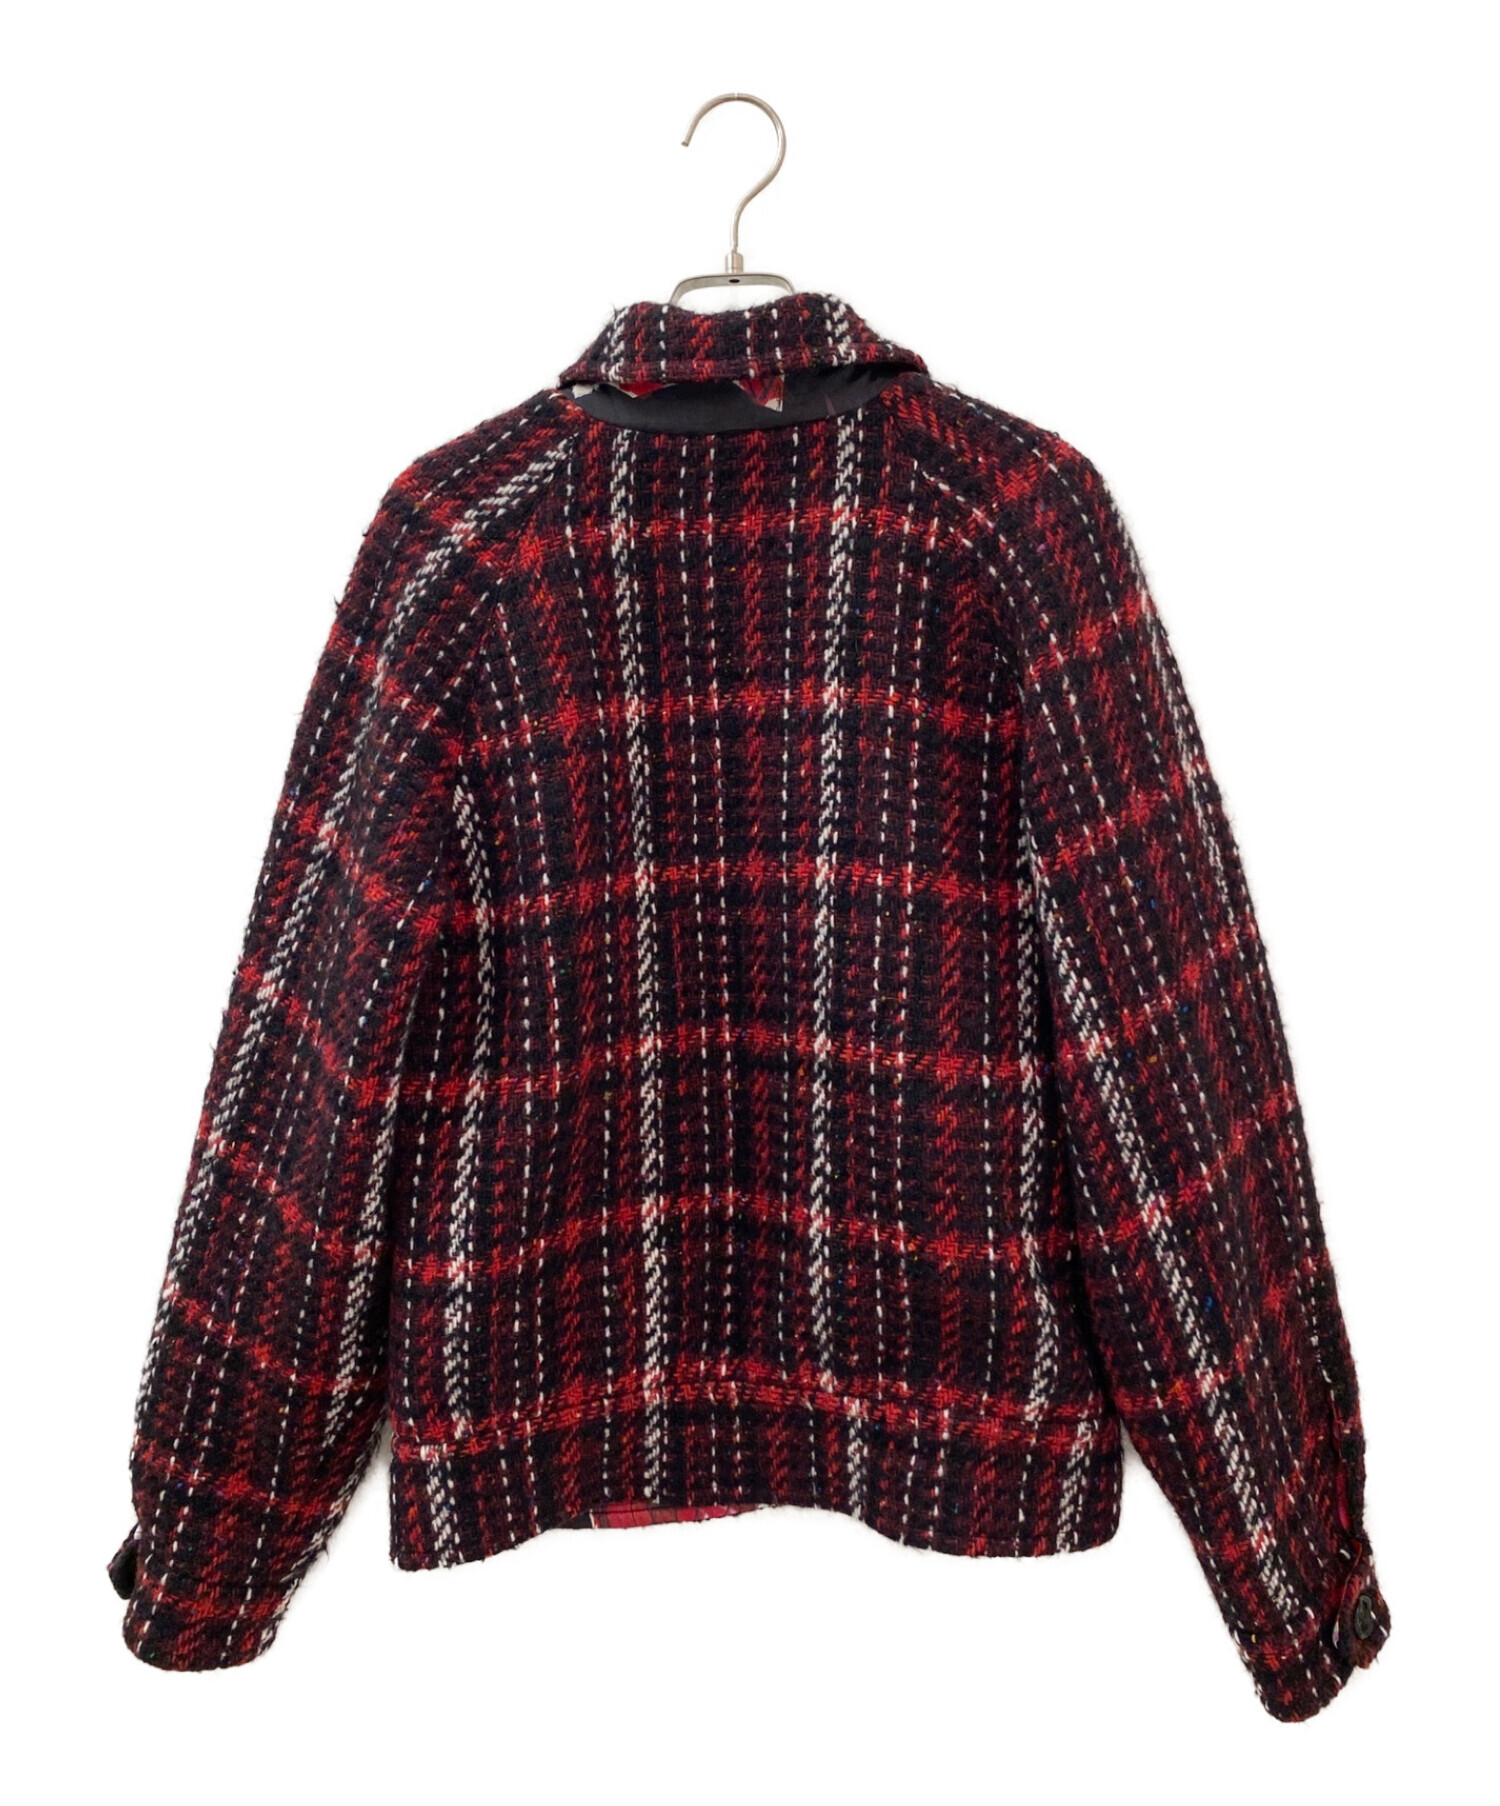 MARNI (マルニ) speckeled tweed jacket レッド サイズ:38